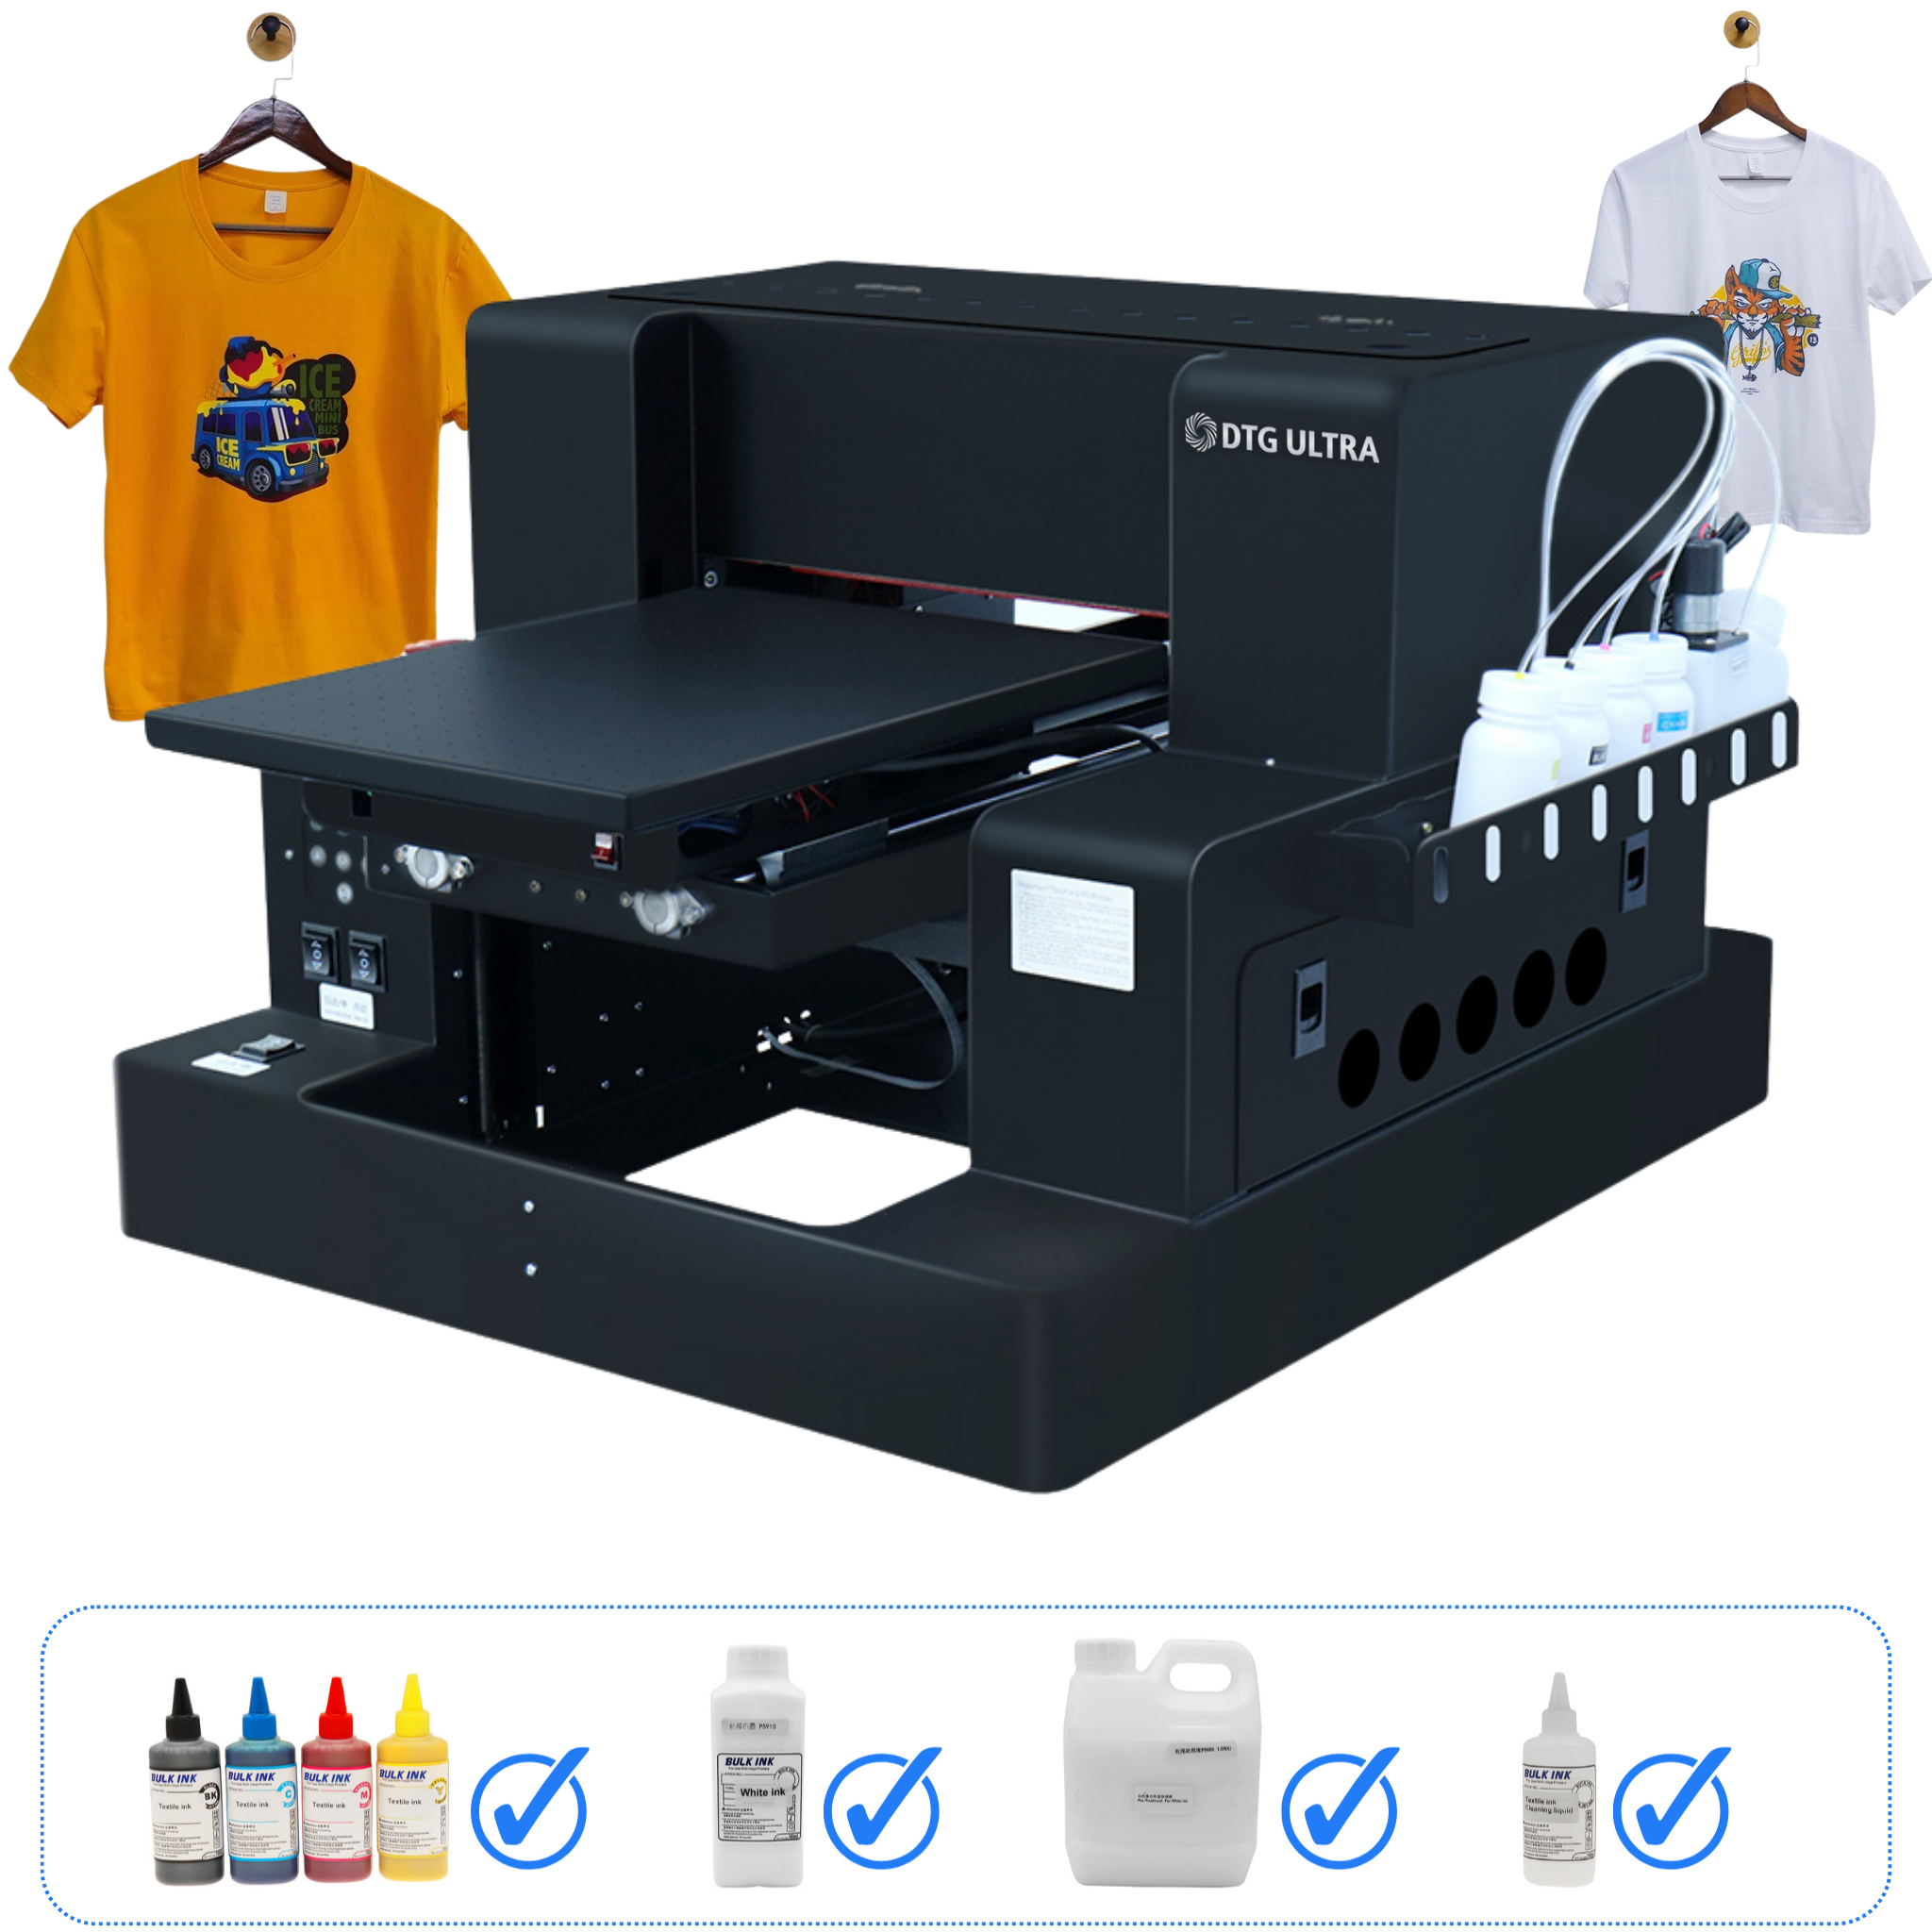 DTG Printer - Lester Printer Machines